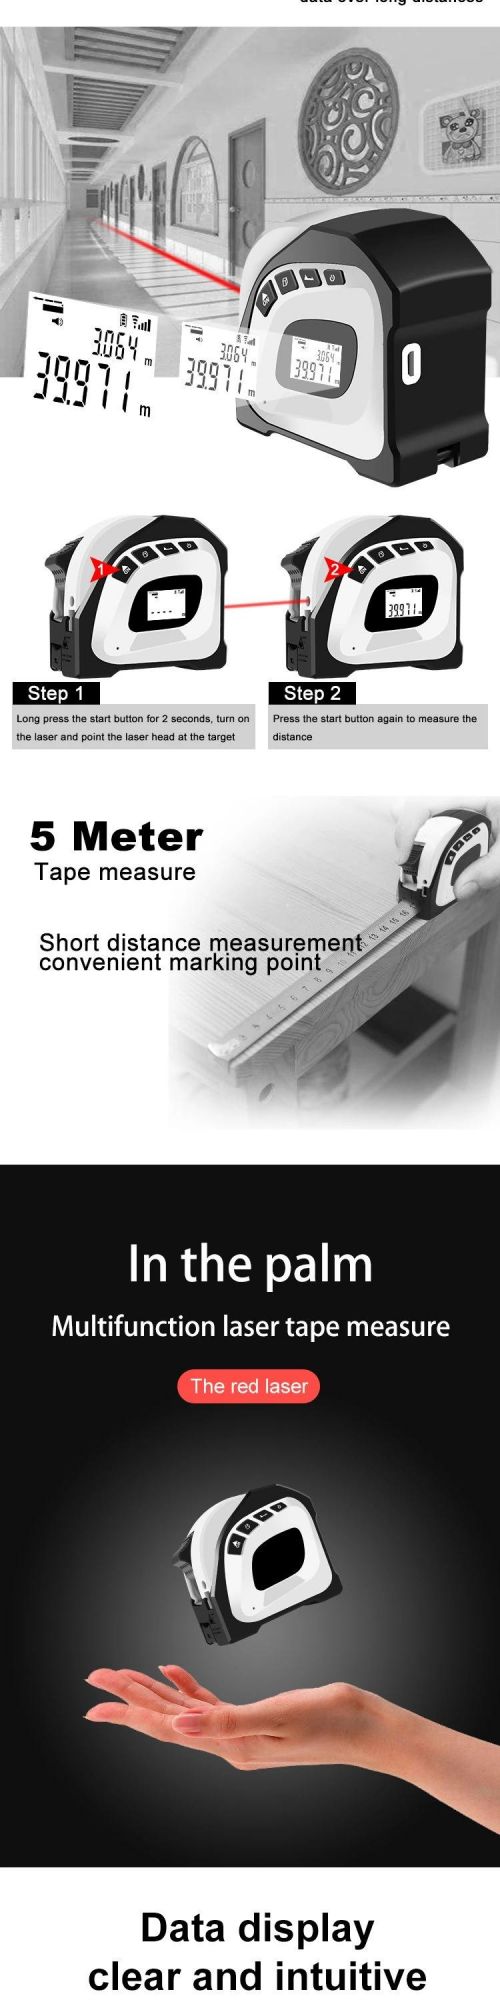 40m Precision Laser Tape Measures Device Digital OEM